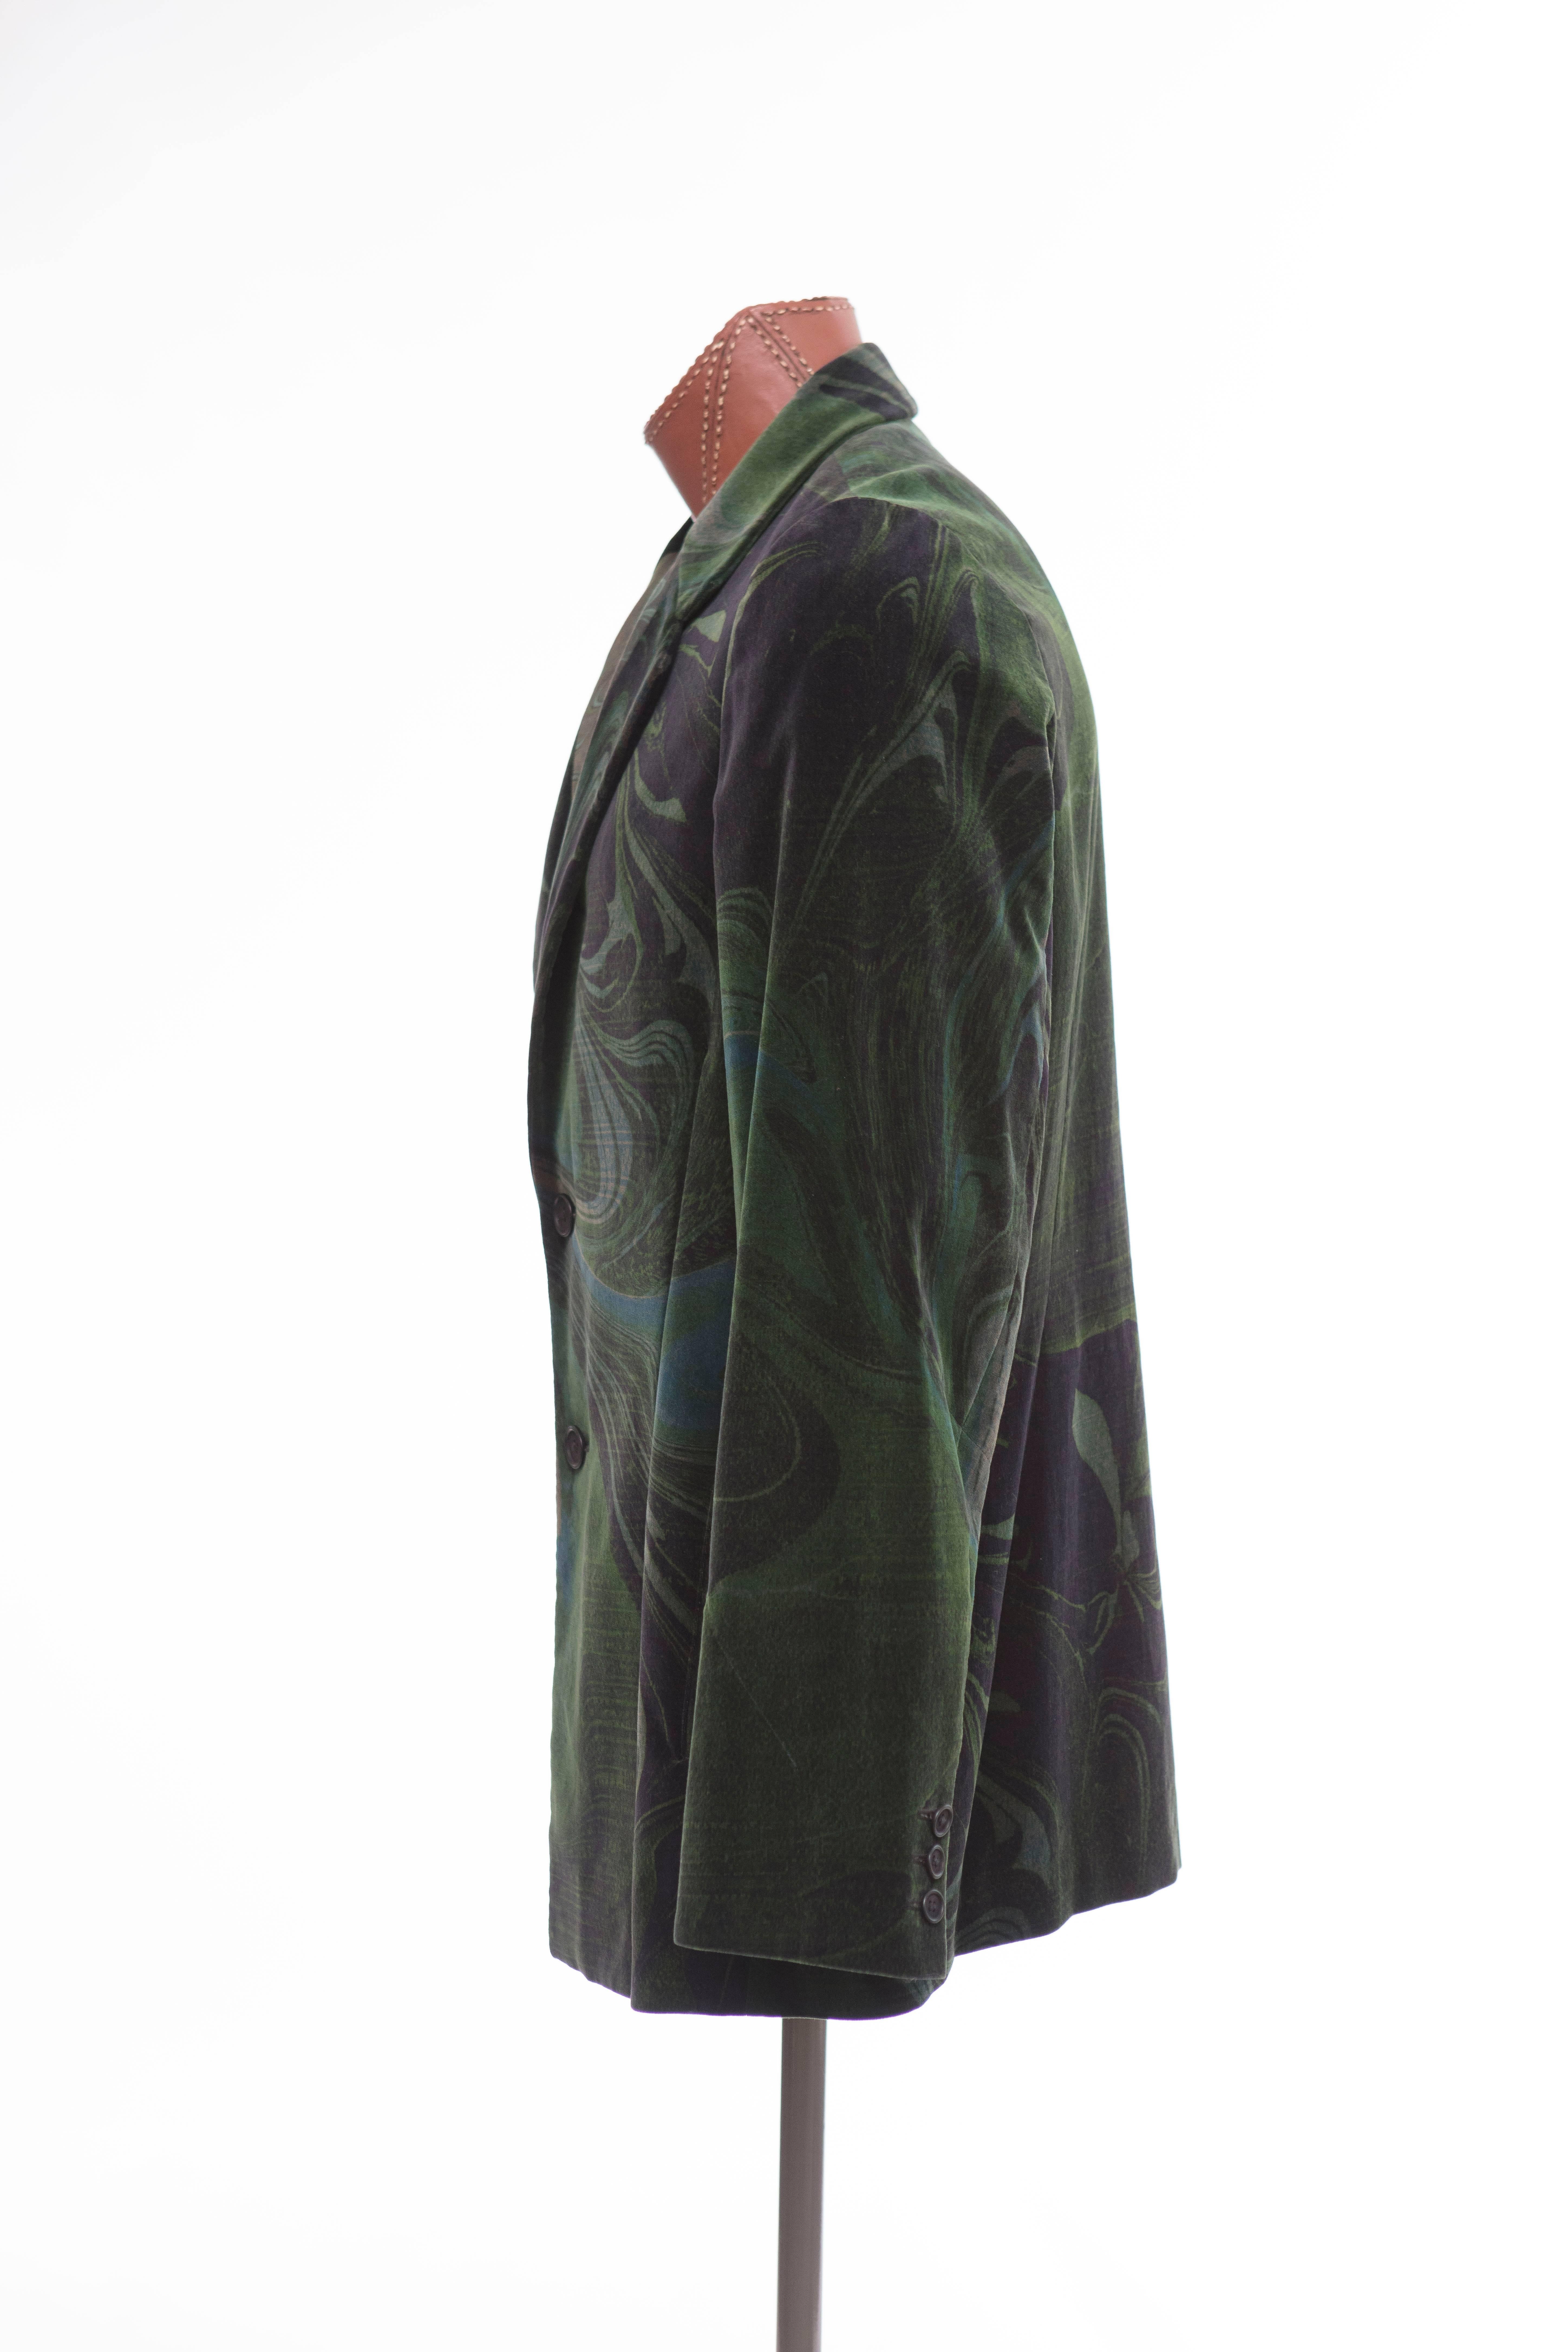 Yohji Yamamoto Men's Emerald Green Velvet Blazer, Autumn - Winter 2015 2